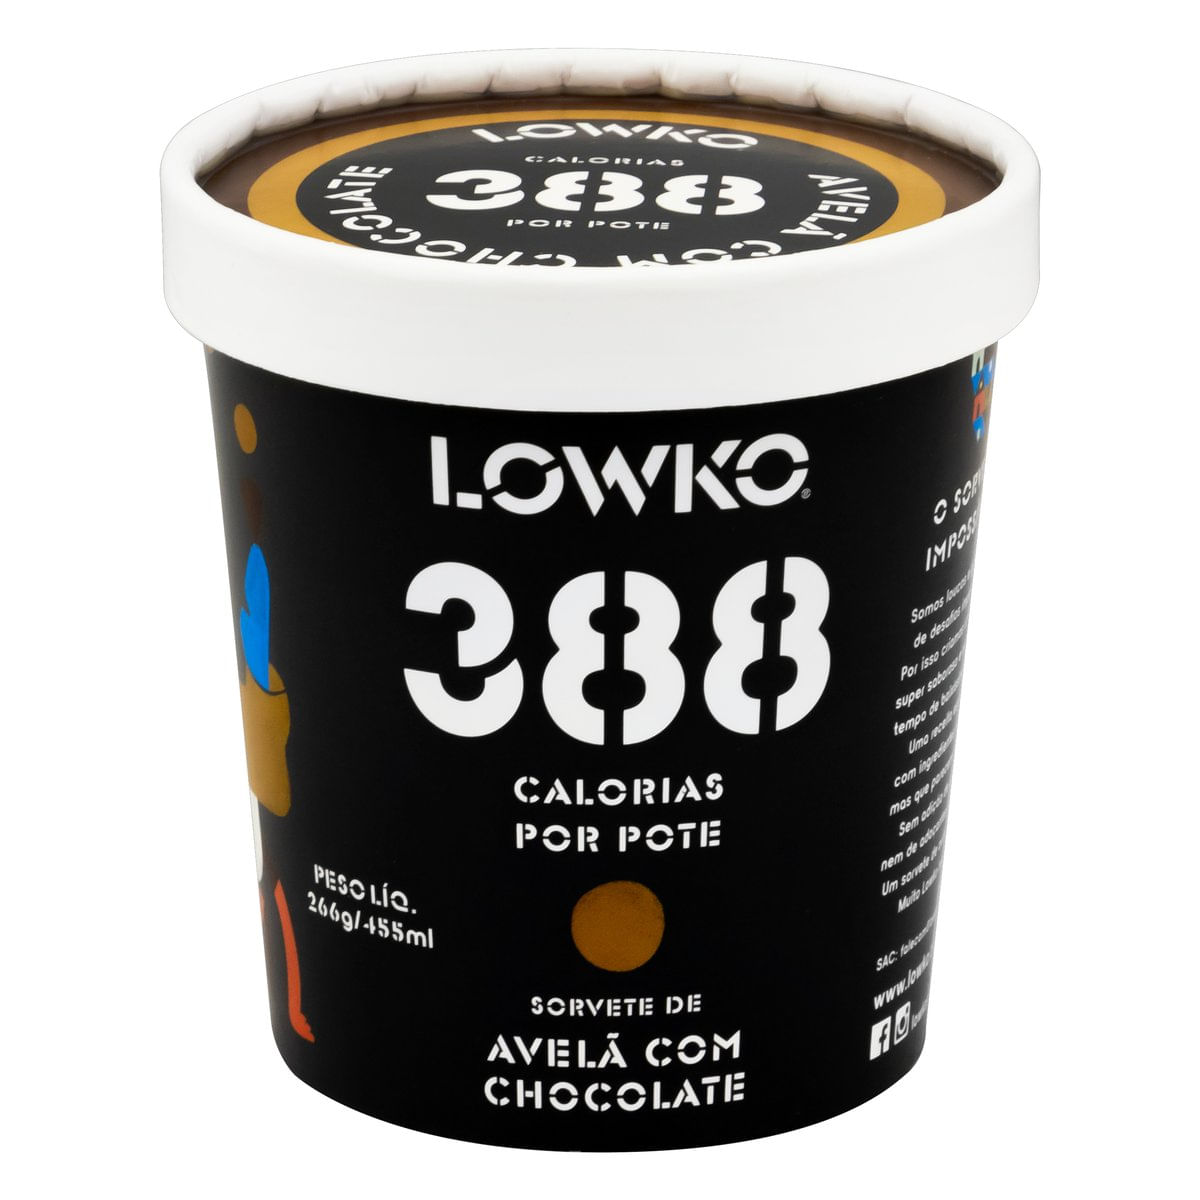 sorvete-avela-com-chocolate-lowko-pote-455-ml-1.jpg